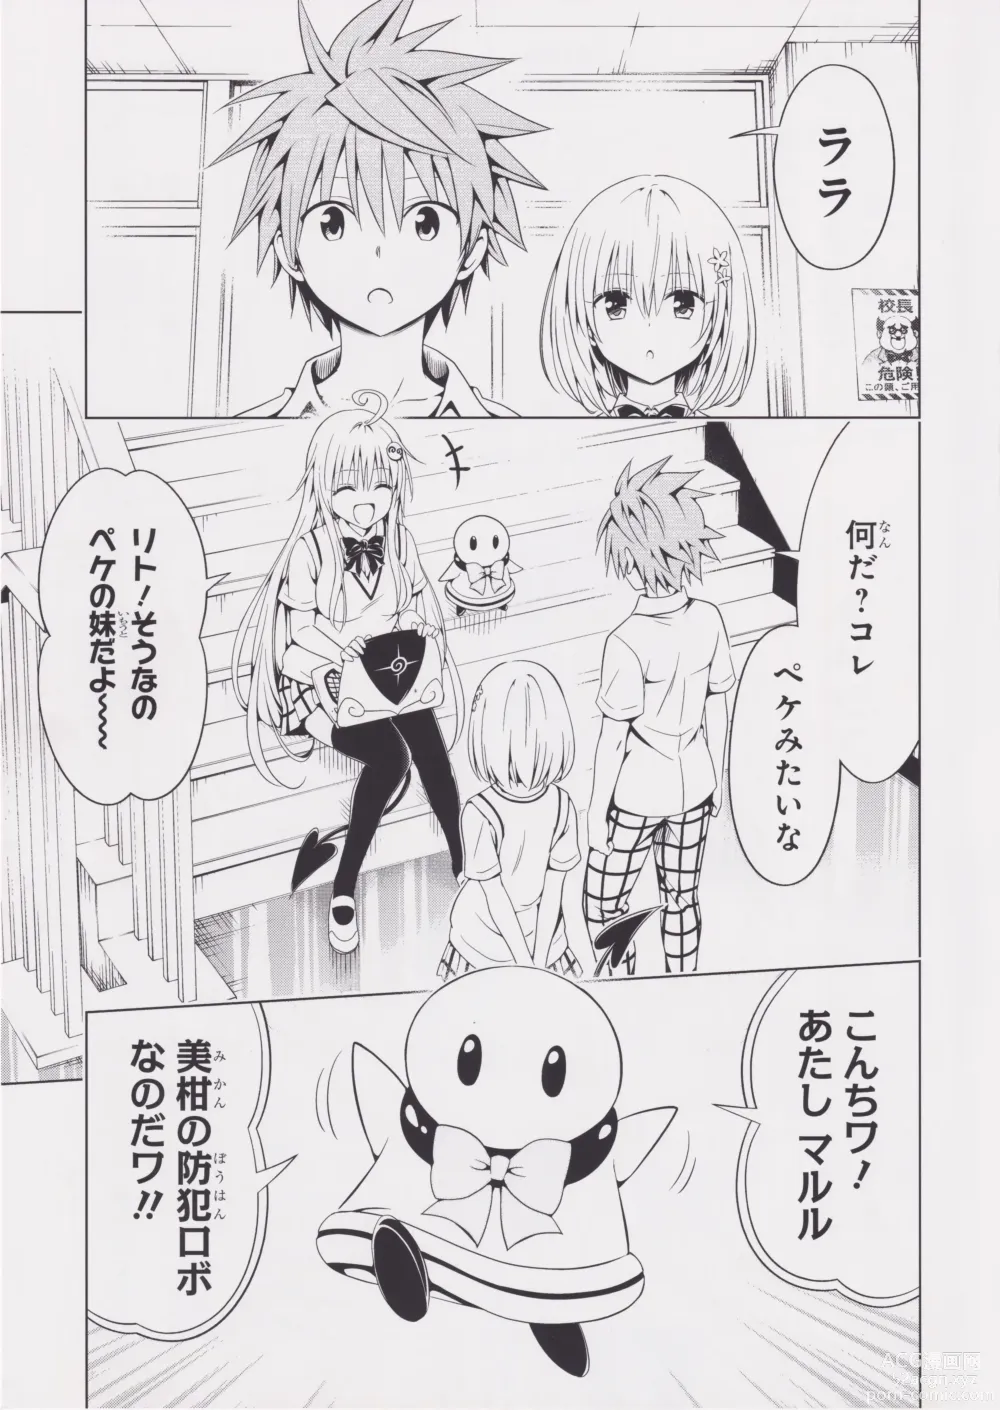 Page 56 of manga Highlight